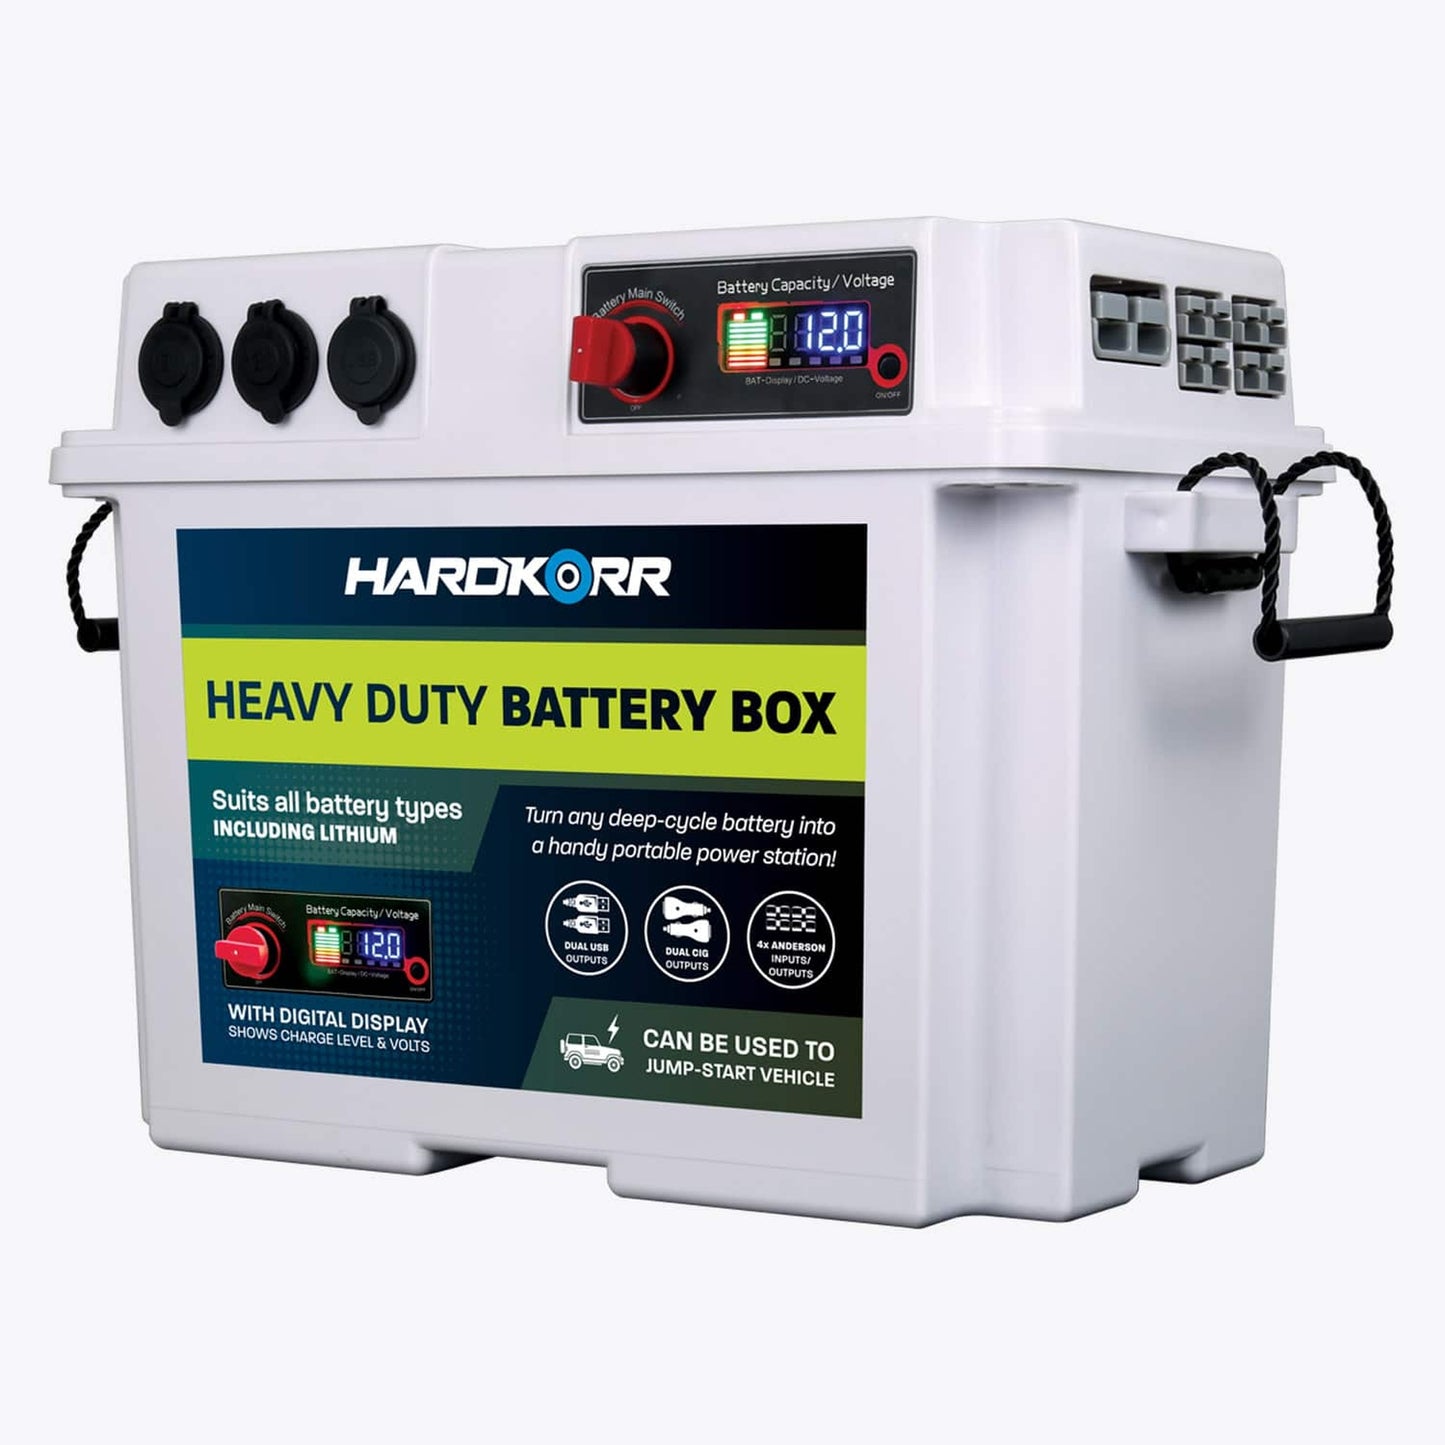 Hard Korr Heavy Duty Battery Box